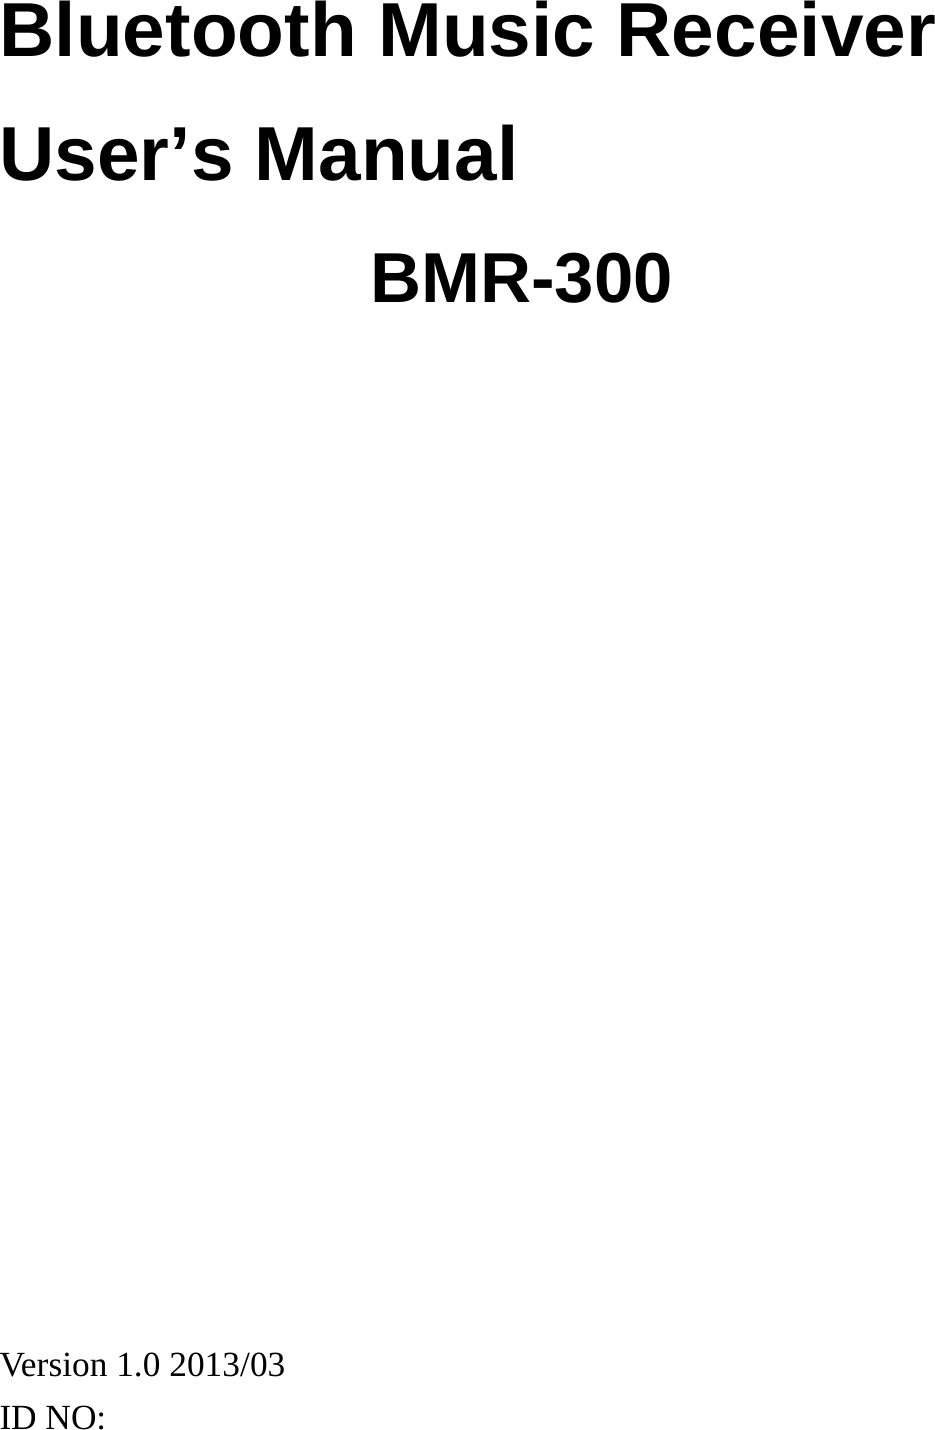 Bluetooth Music Receiver User’s Manual BMR-300               Version 1.0 2013/03 ID NO: 